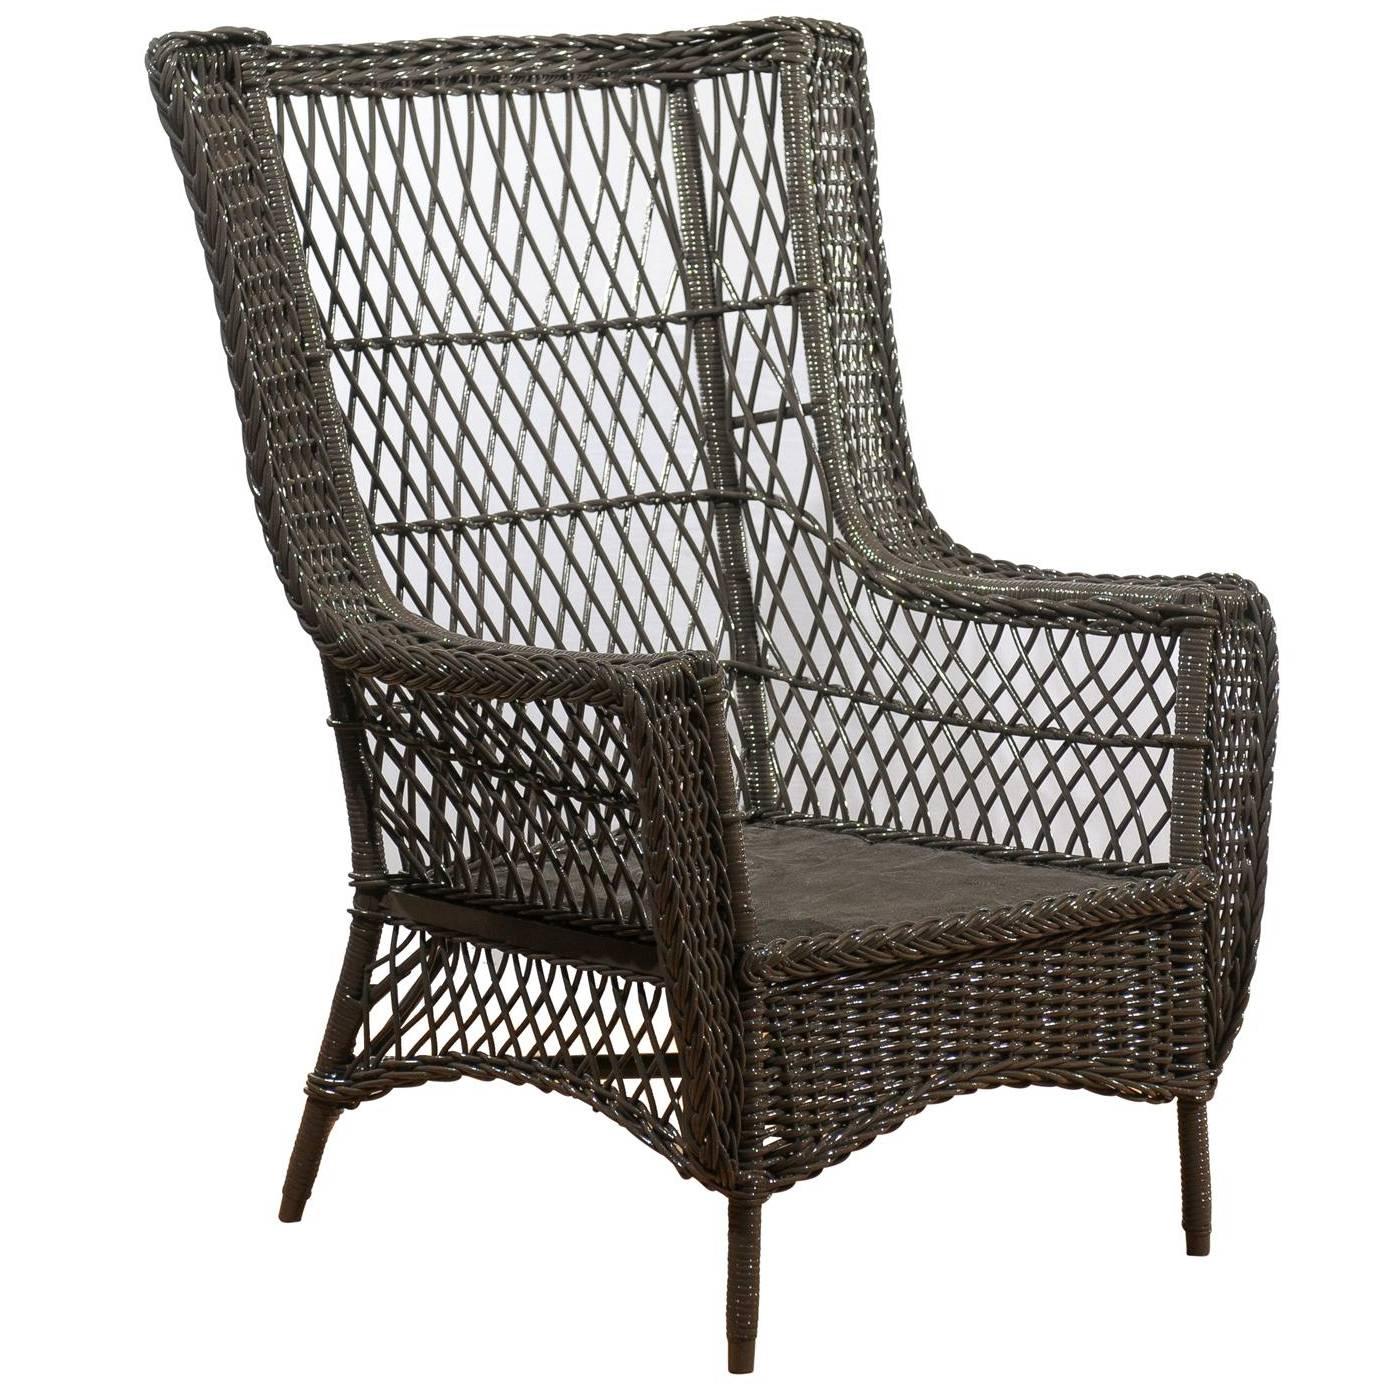 Bar Harbor Wicker Chair, circa 1915-1925